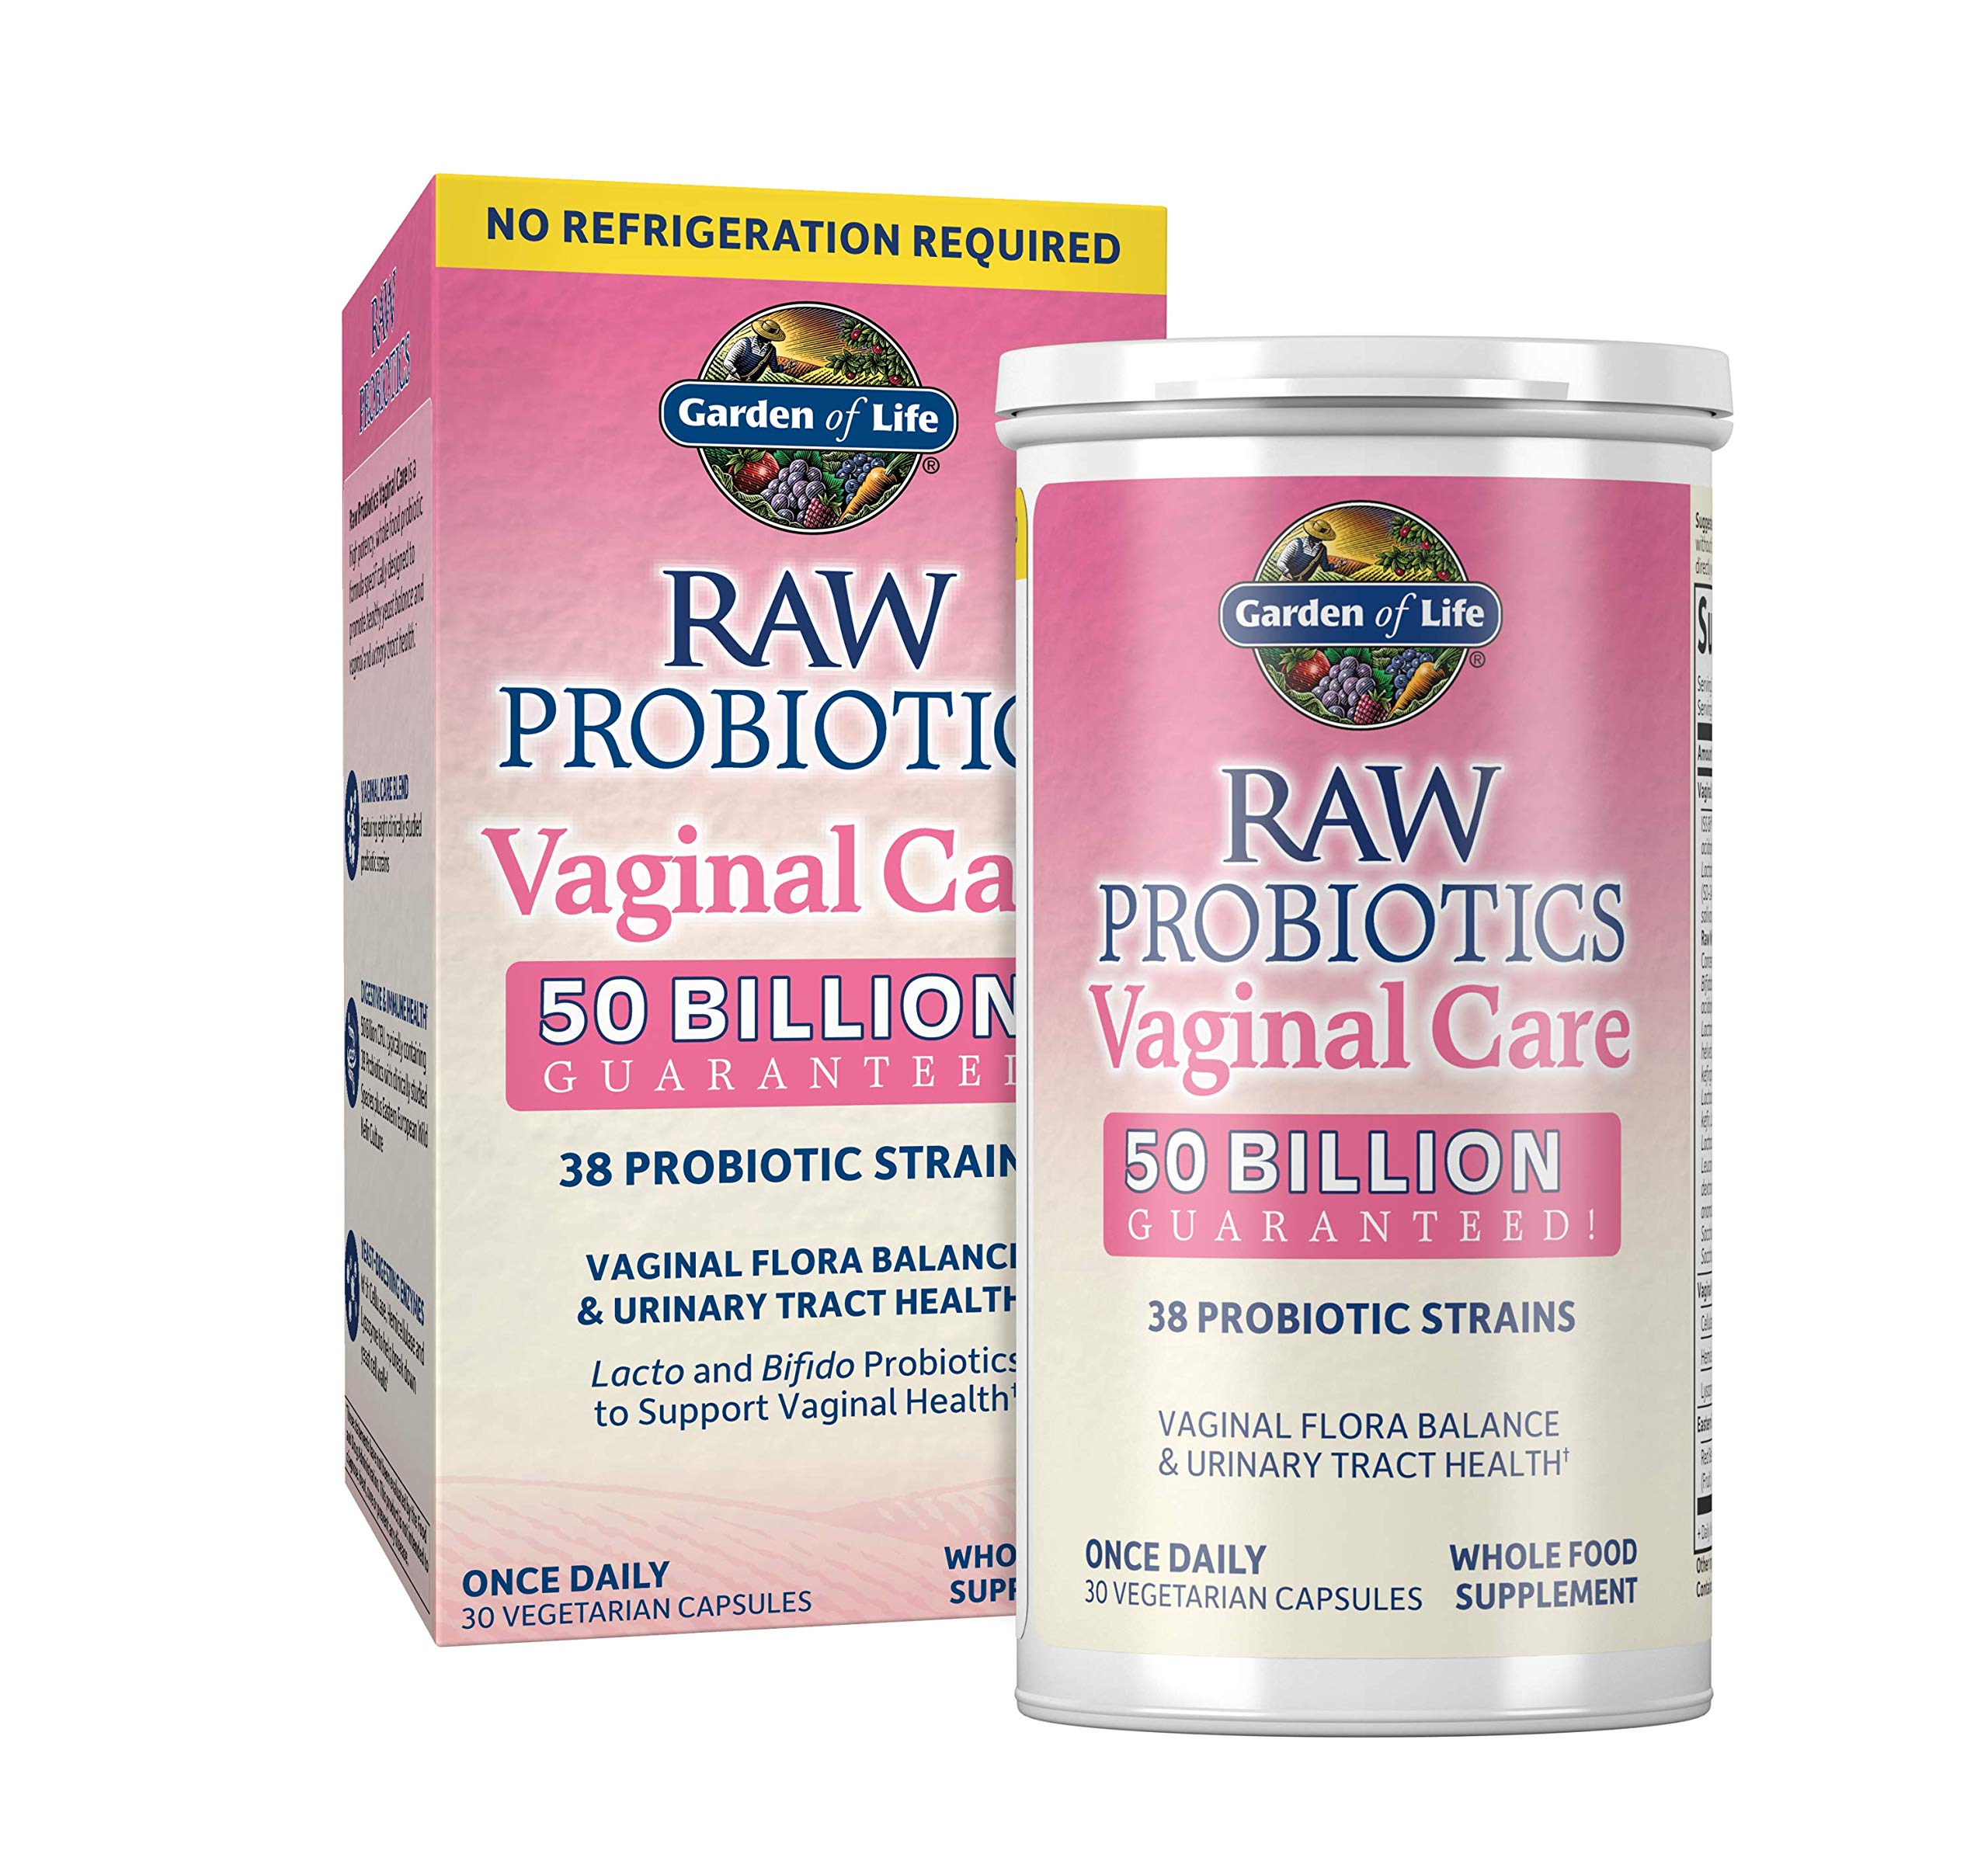 Garden of Life RAW Probiotics Vaginal Care Shelf Stable - 50 Billion CFU - Once Daily 30 Vegetarian Capsules